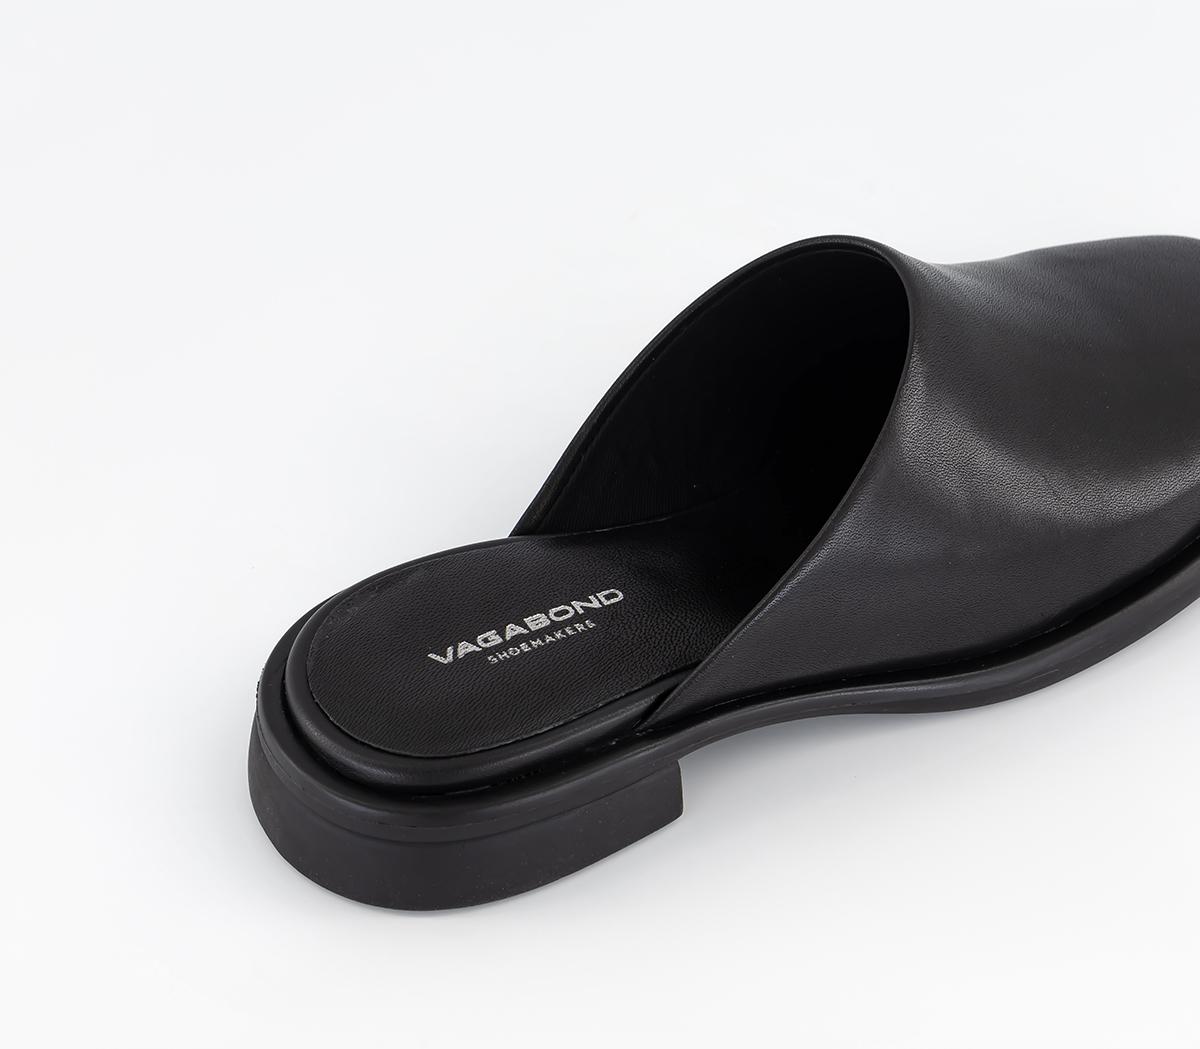 Vagabond Shoemakers Brittie Mules Black Leather - Flat Shoes for Women